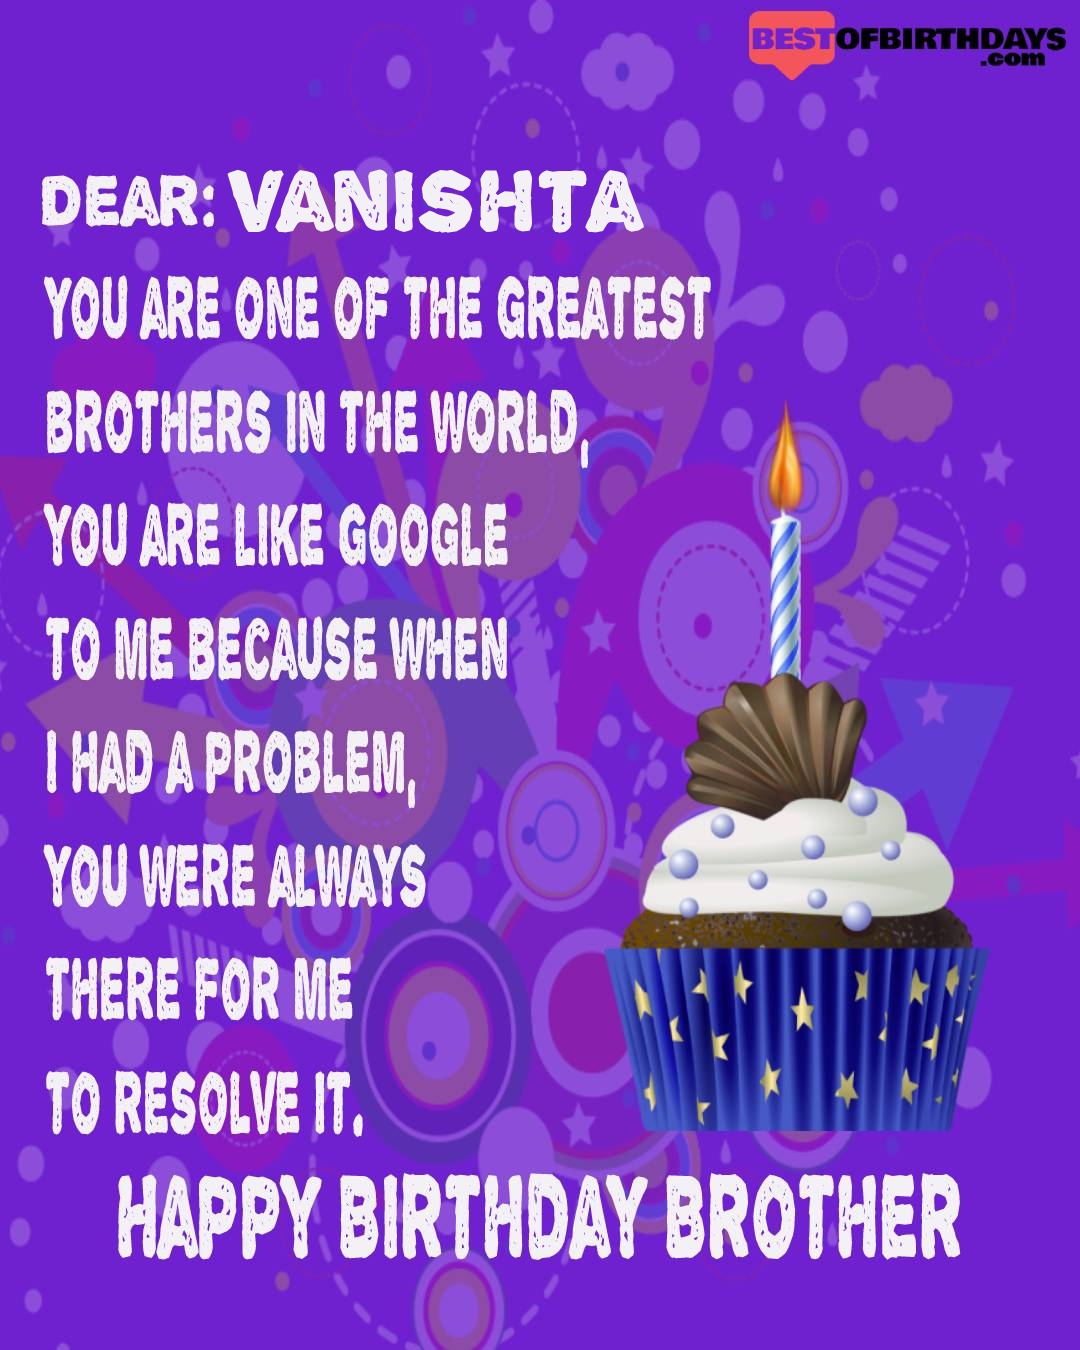 Happy birthday vanishta bhai brother bro